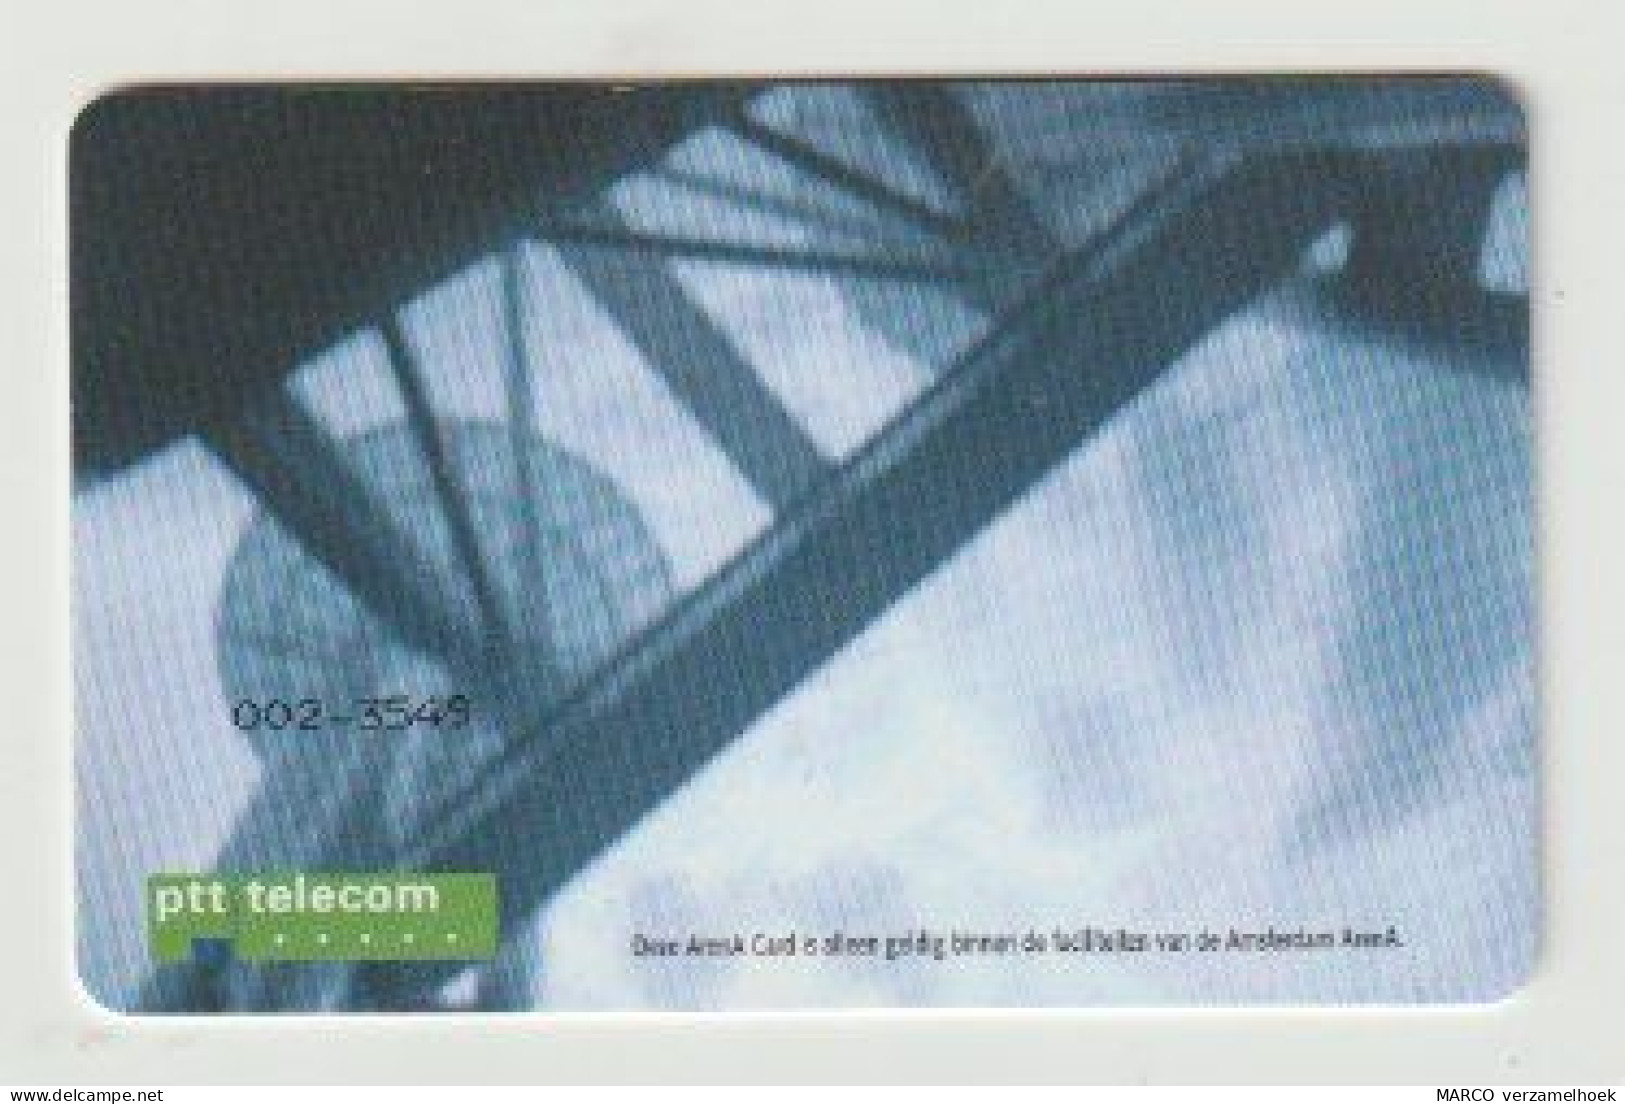 ARENA-card Amsterdam (NL) Ajax-PTT Telecom - Sin Clasificación